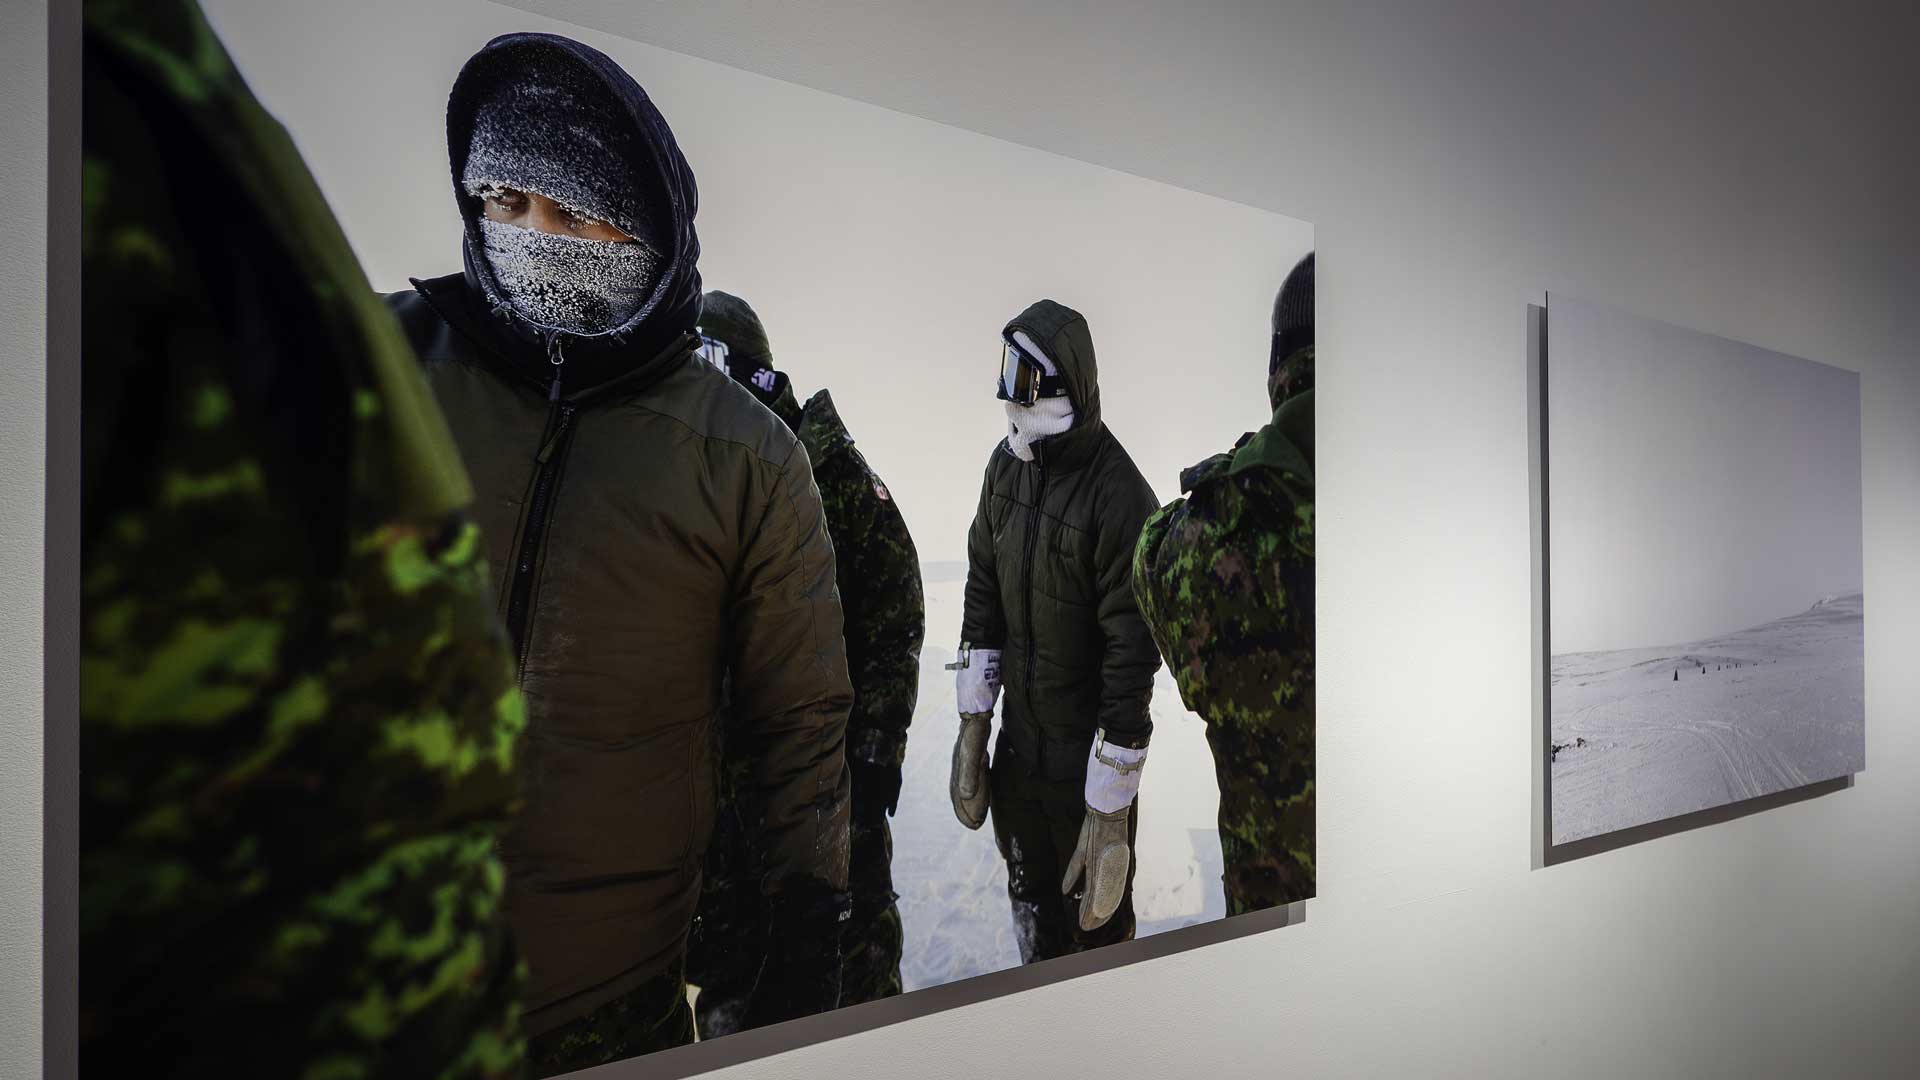 Emmanuelle Léonard’s “Deployment” presented at the Canadian Cultural Center in Paris